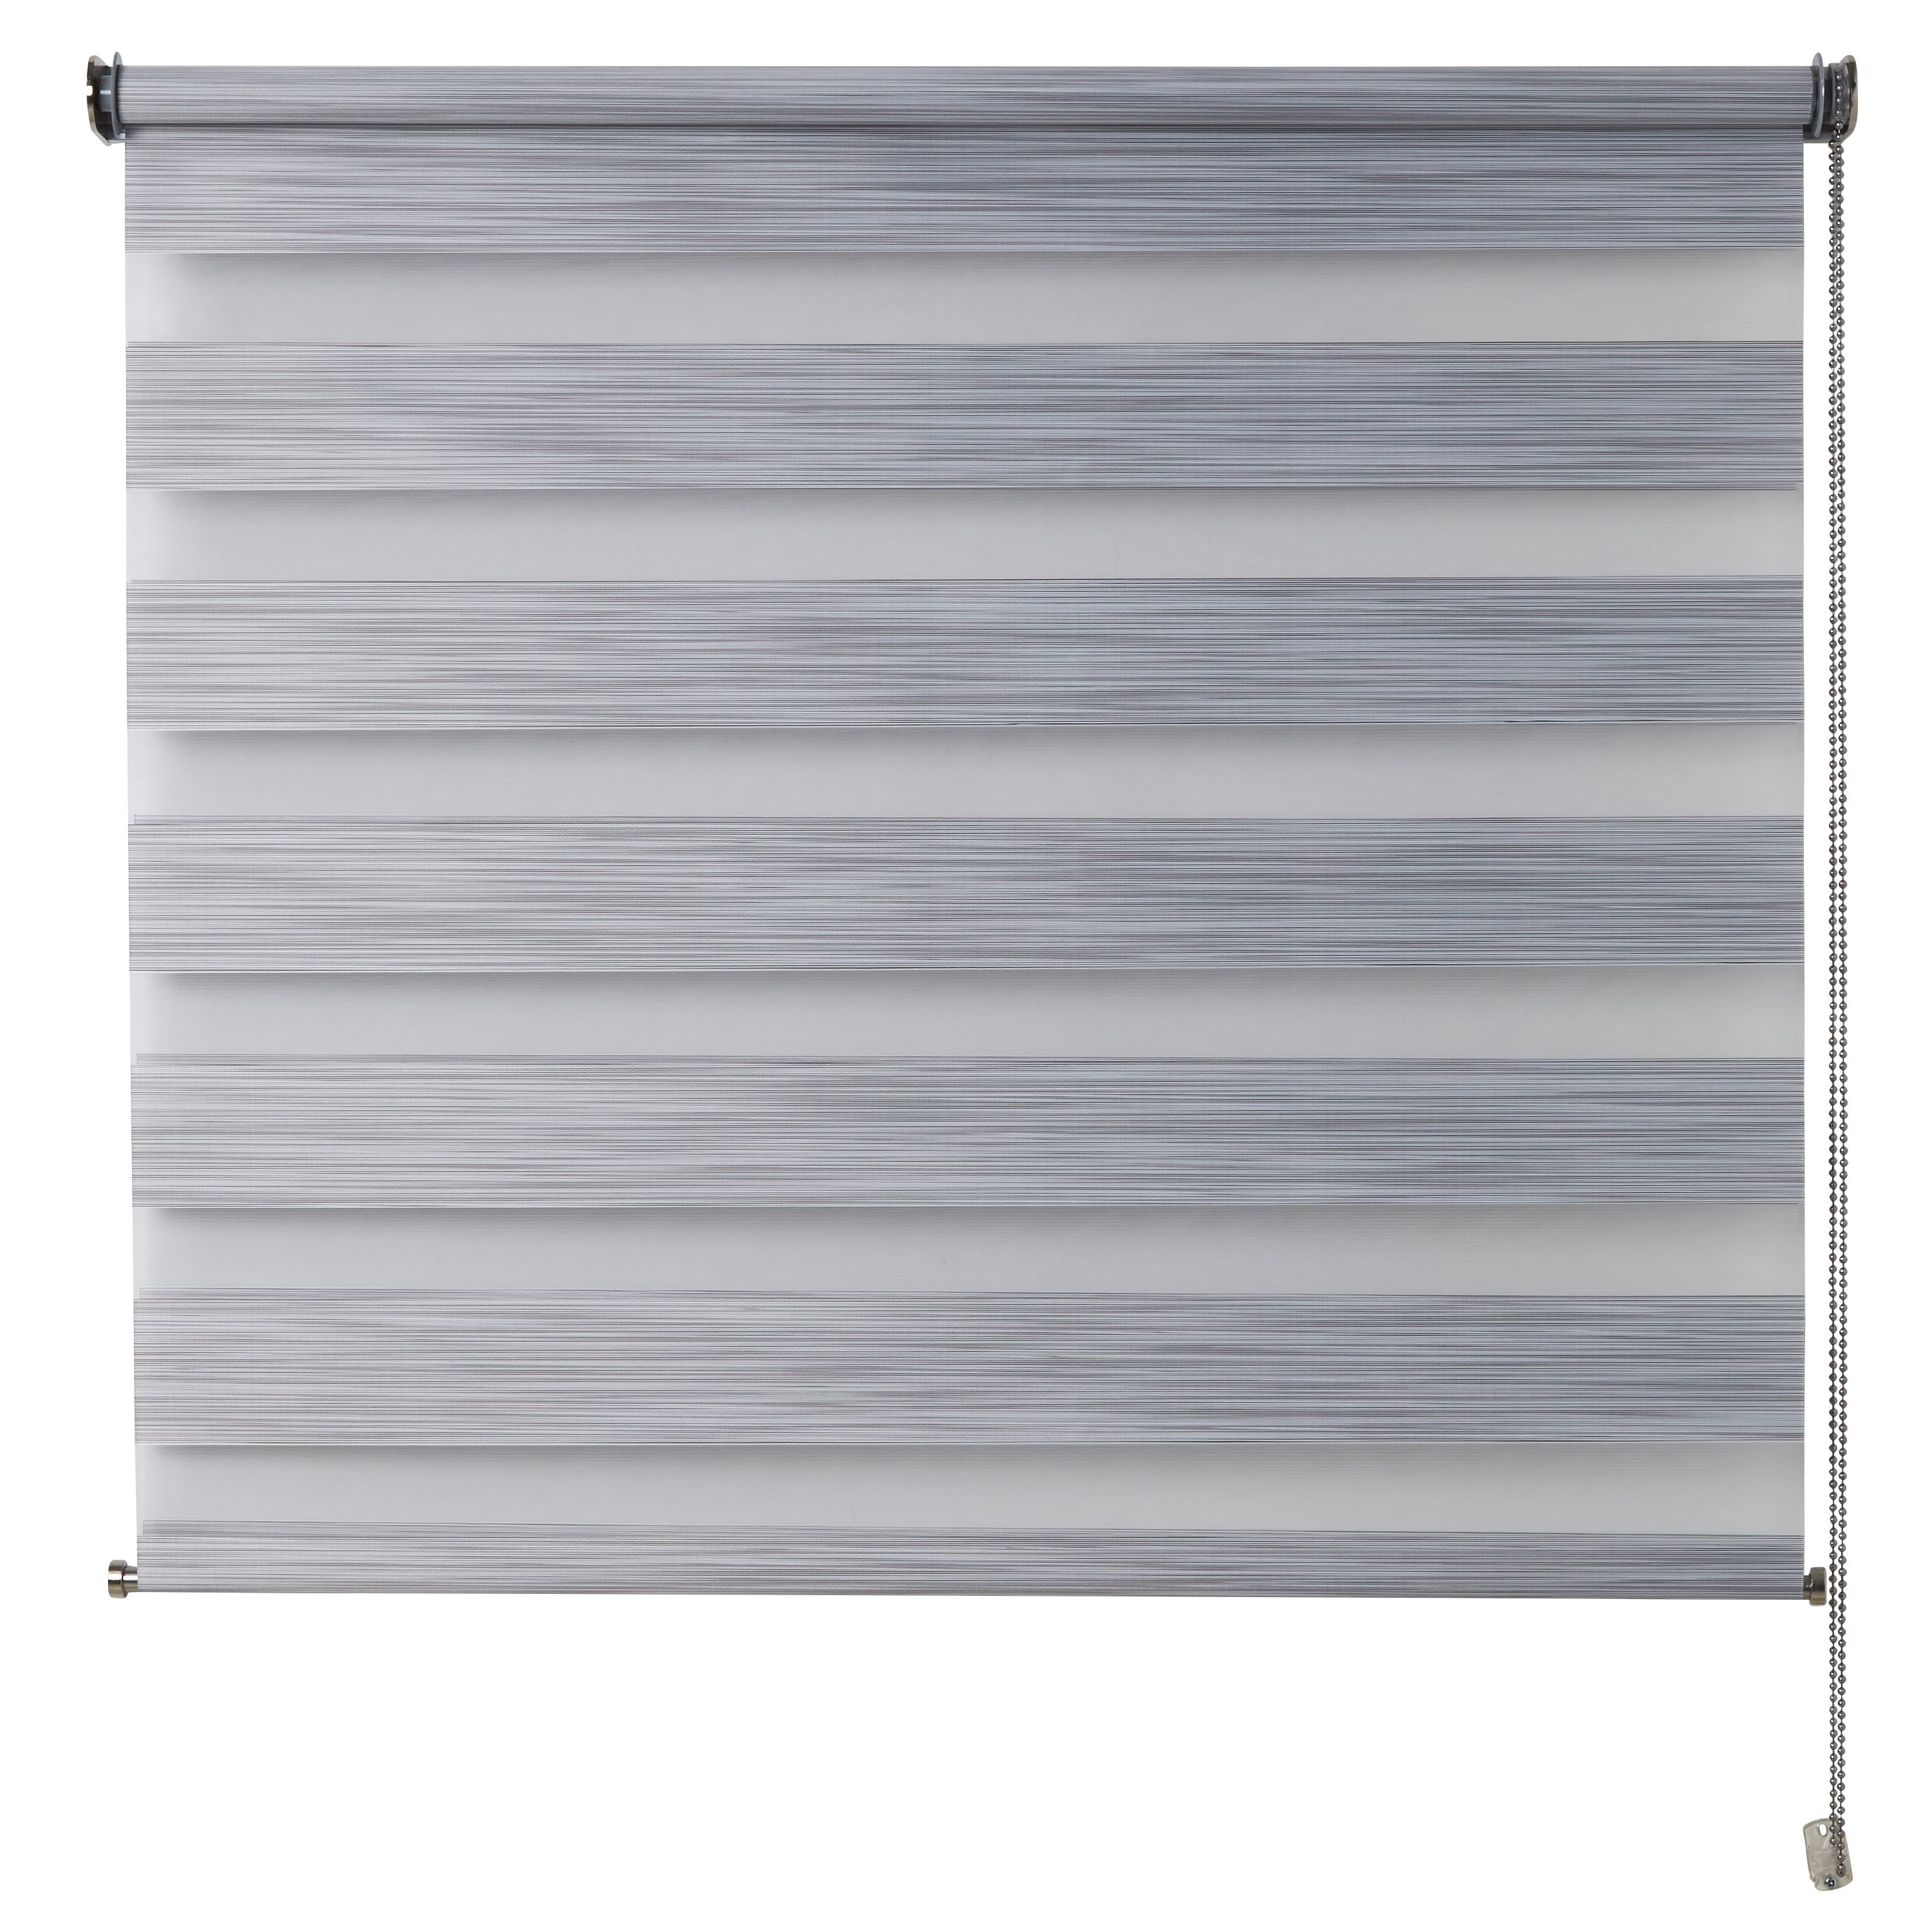 Kala Corded Grey Striped Day & night Roller blind (W)90cm (L)180cm